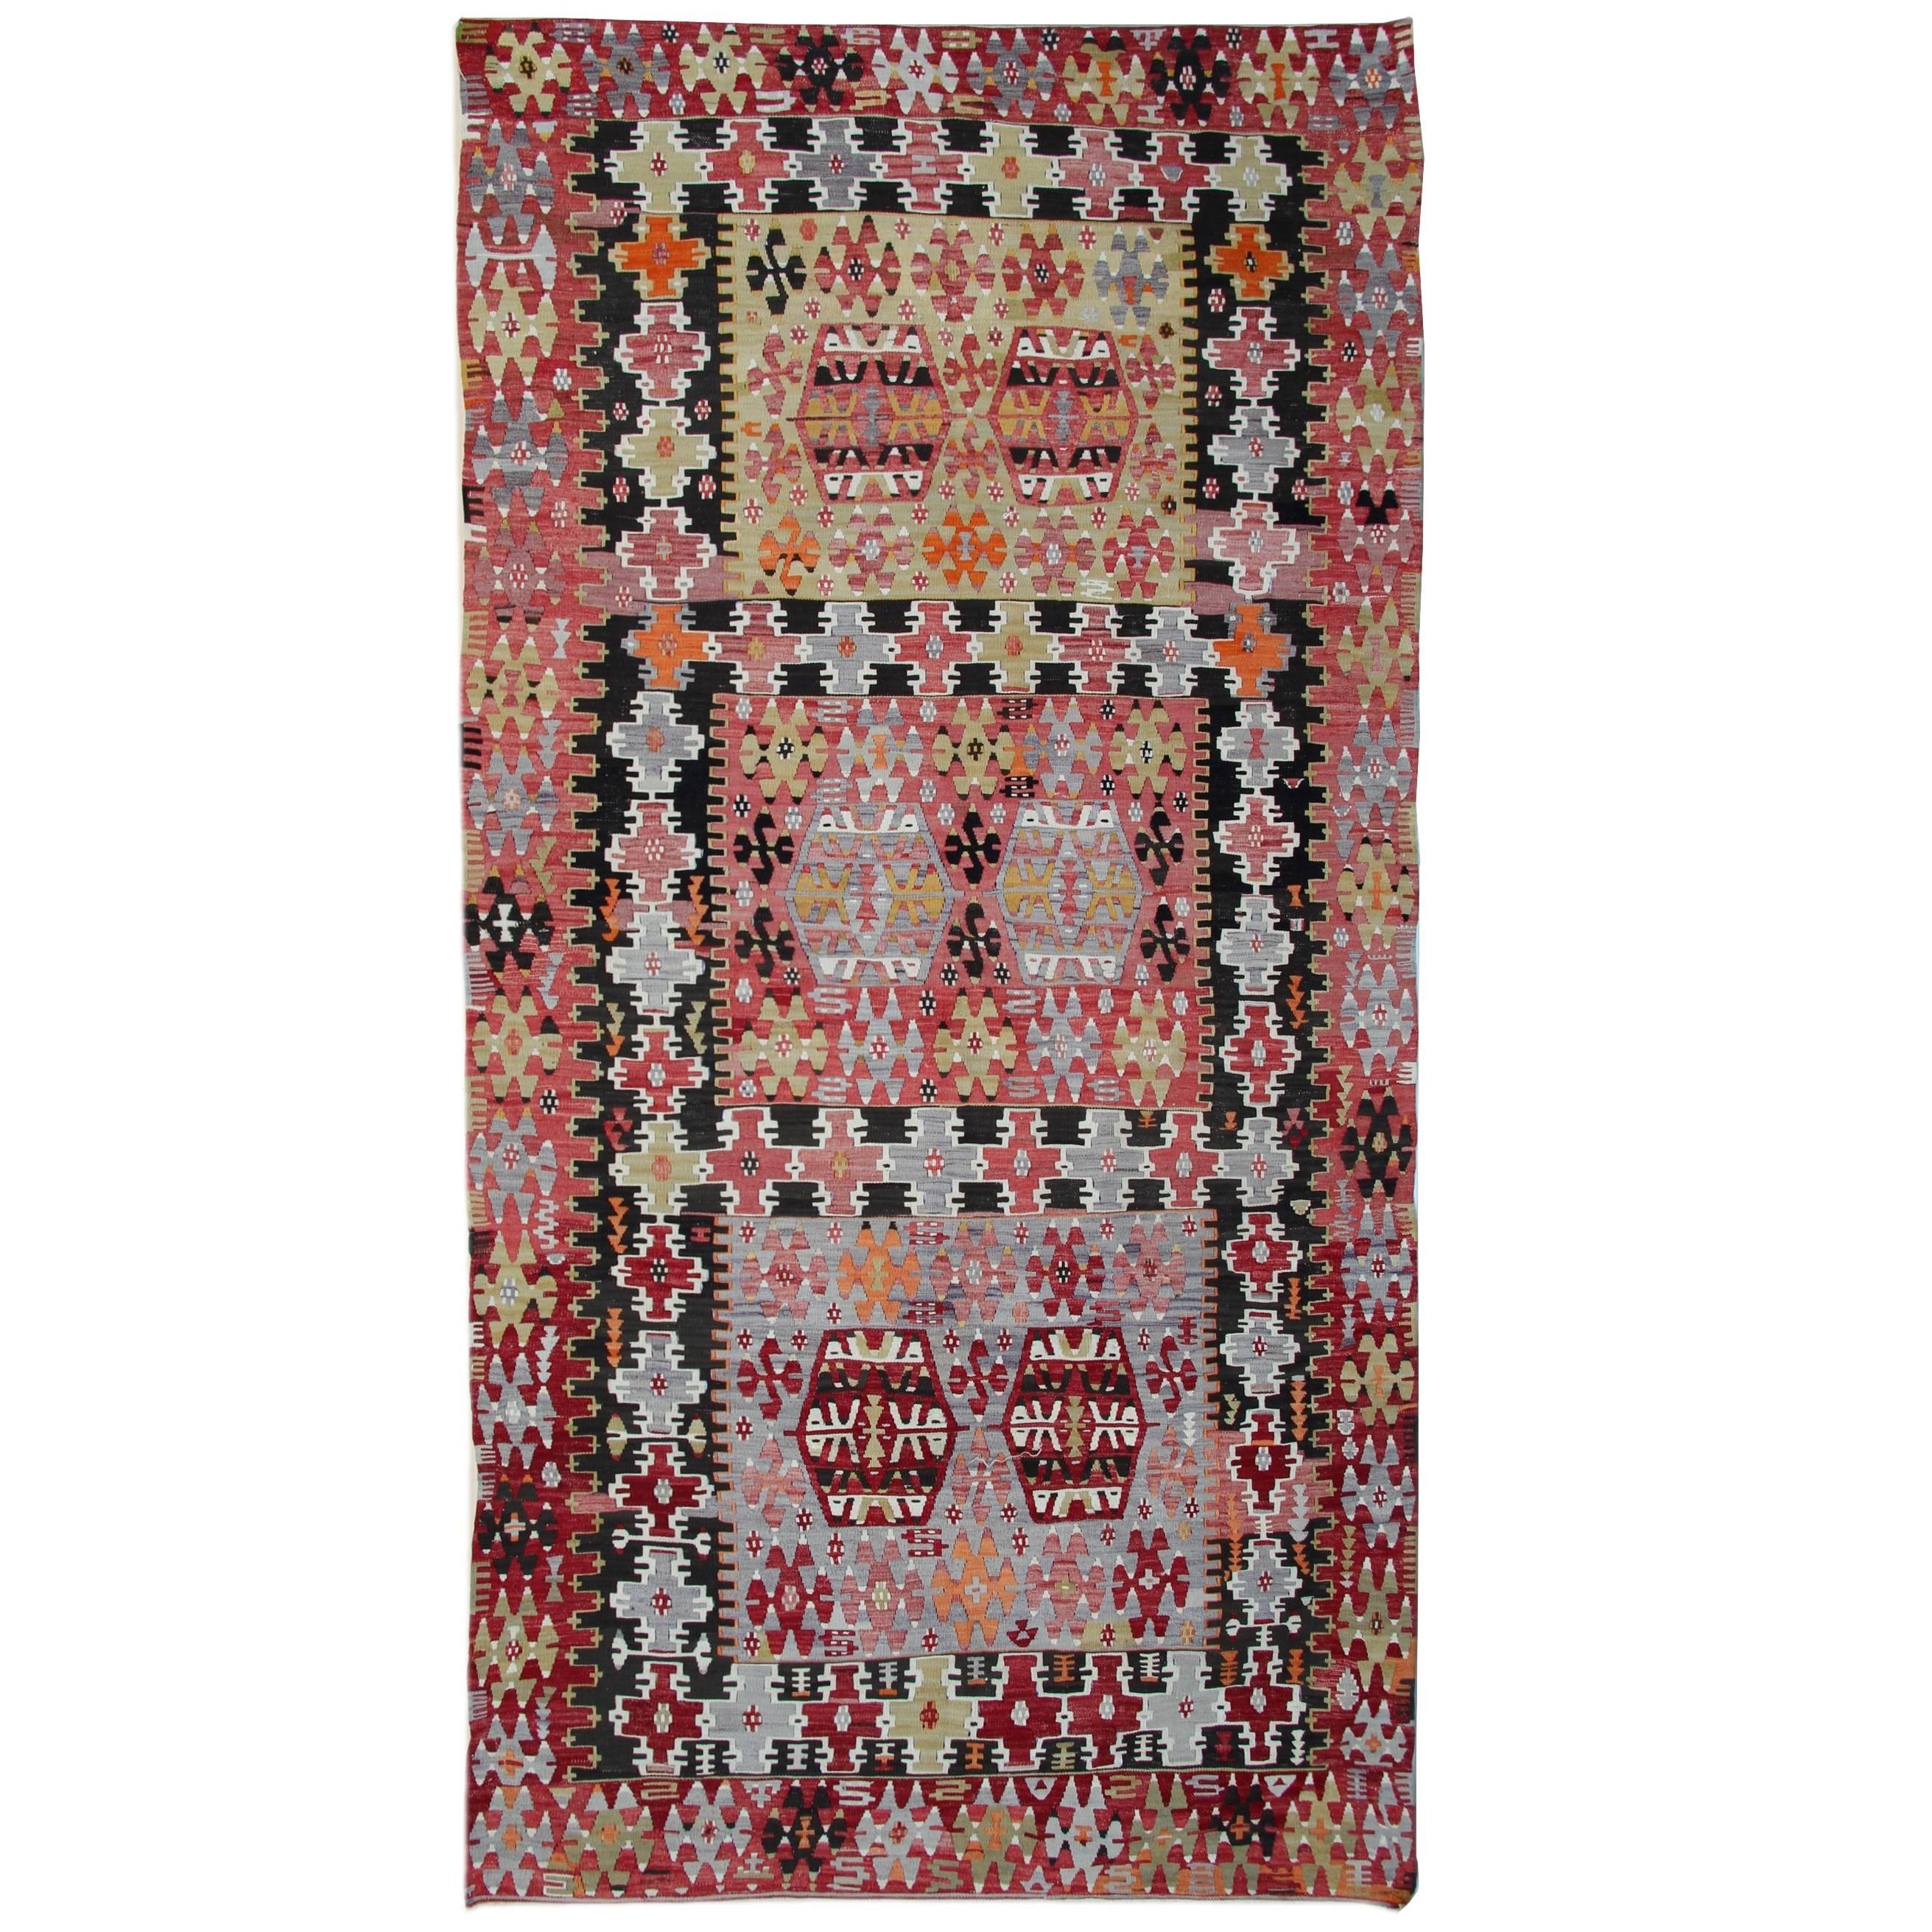 Antique Rugs, Turkish Kilim Rugs, Handmade Carpet, Oriental Rugs for Sale